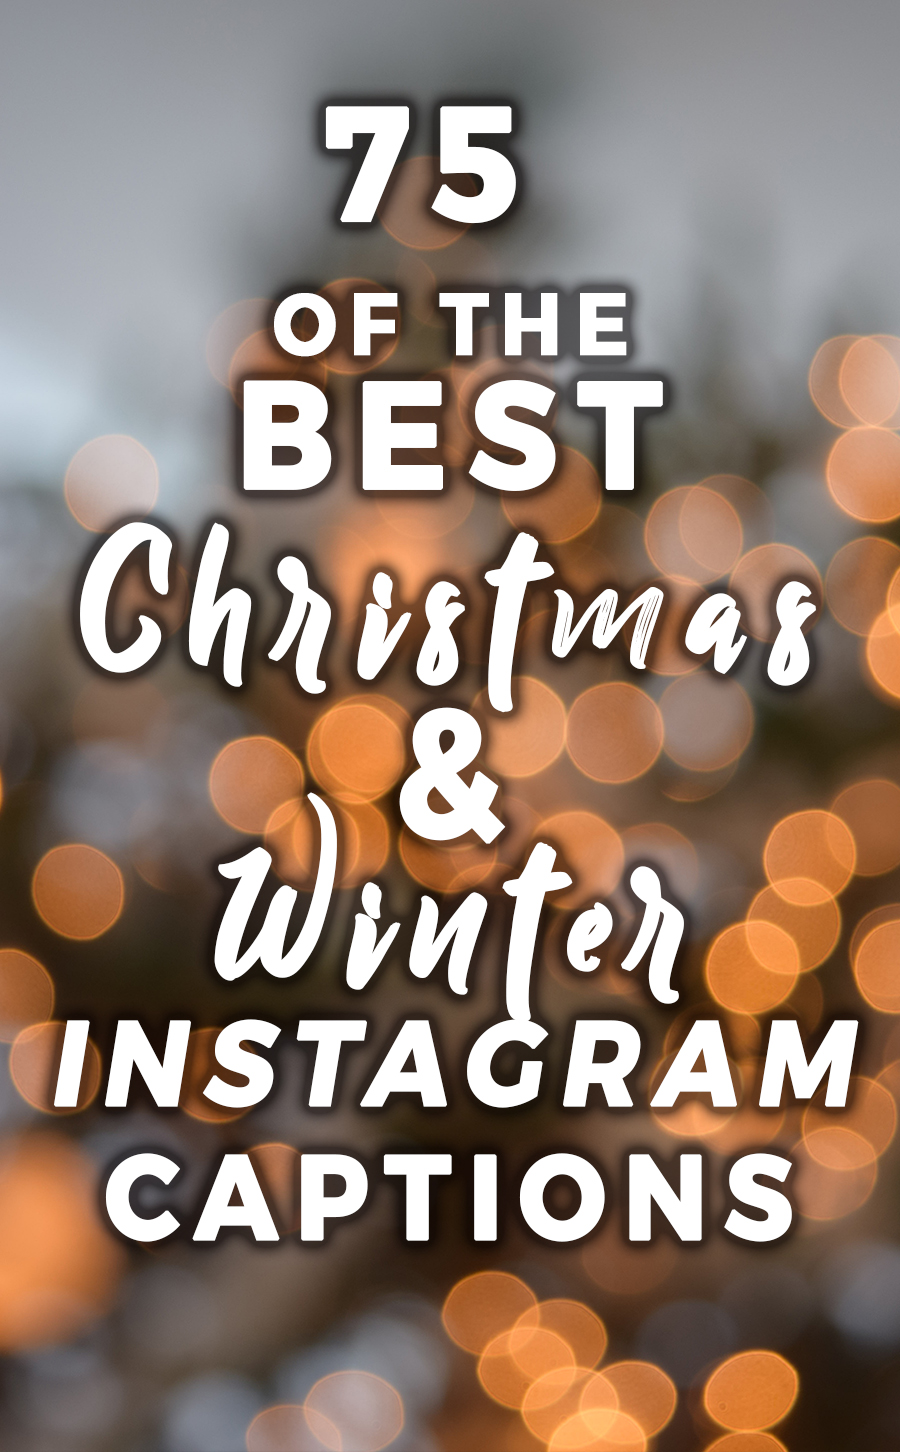 The Best Christmas Instagram Captions - Helene in Between - 900 x 1452 jpeg 618kB